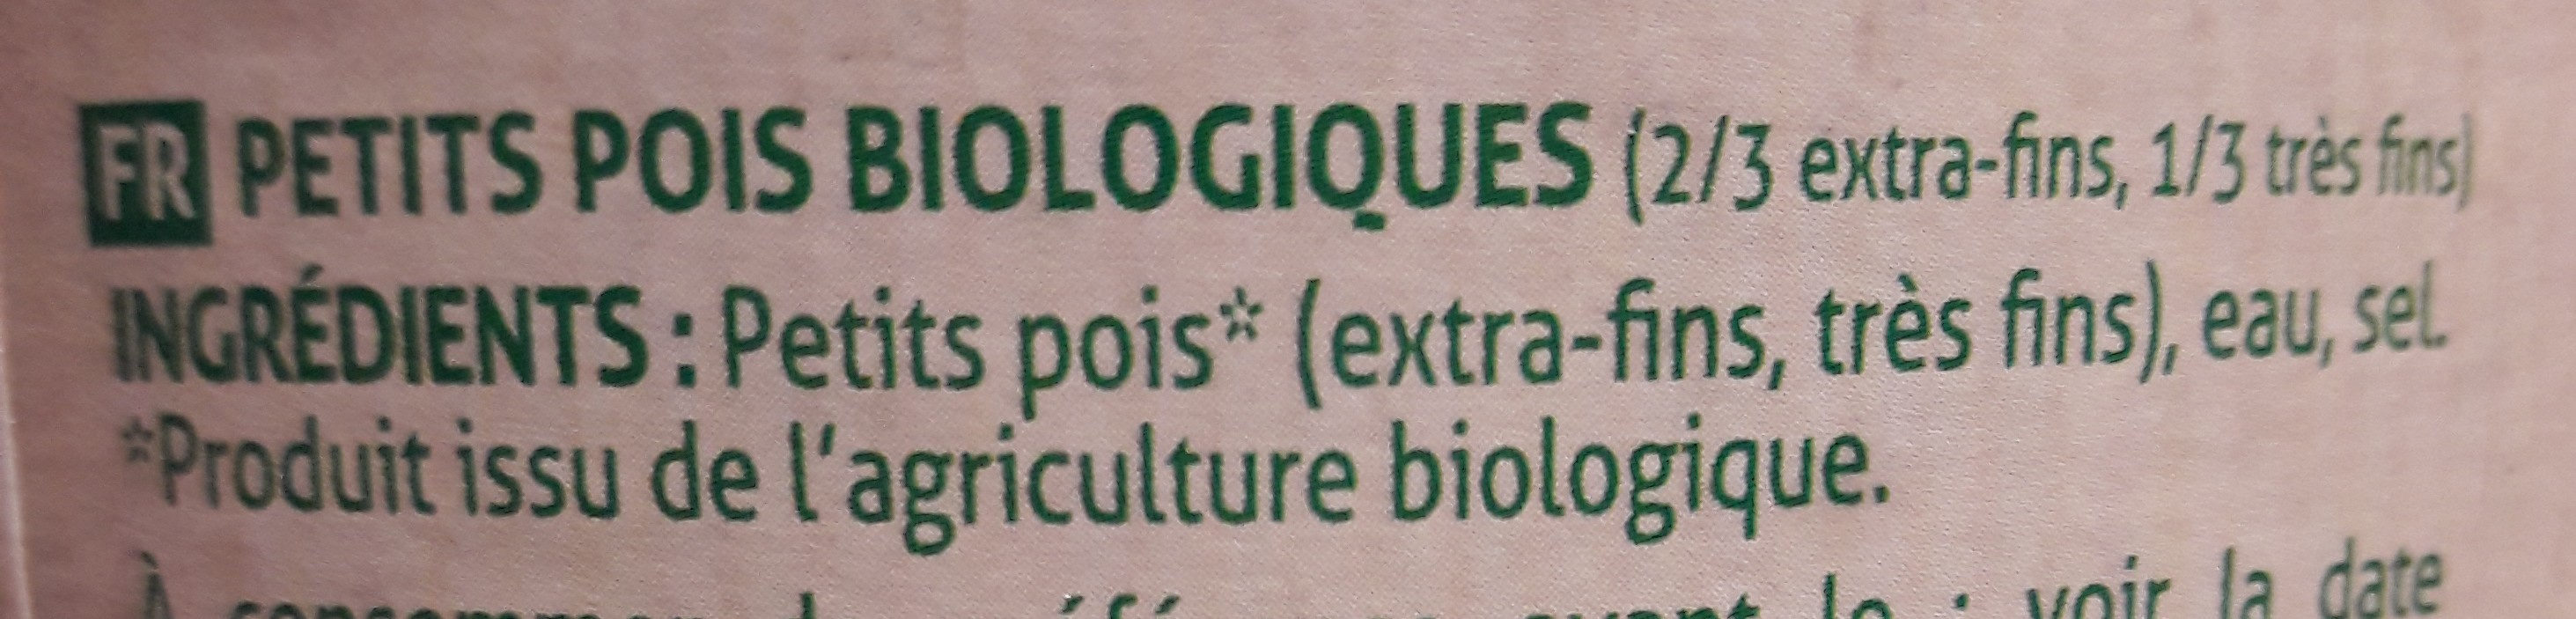 Petits pois bio - Ingredients - fr